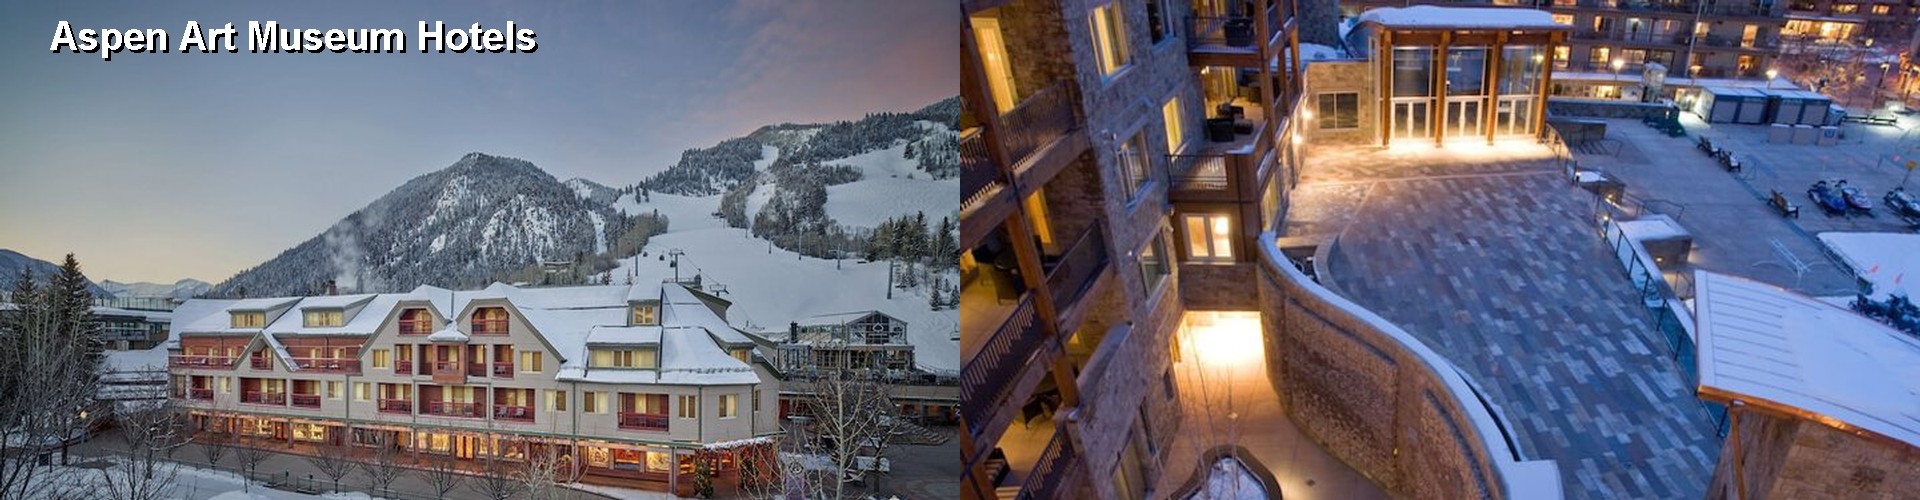 5 Best Hotels near Aspen Art Museum